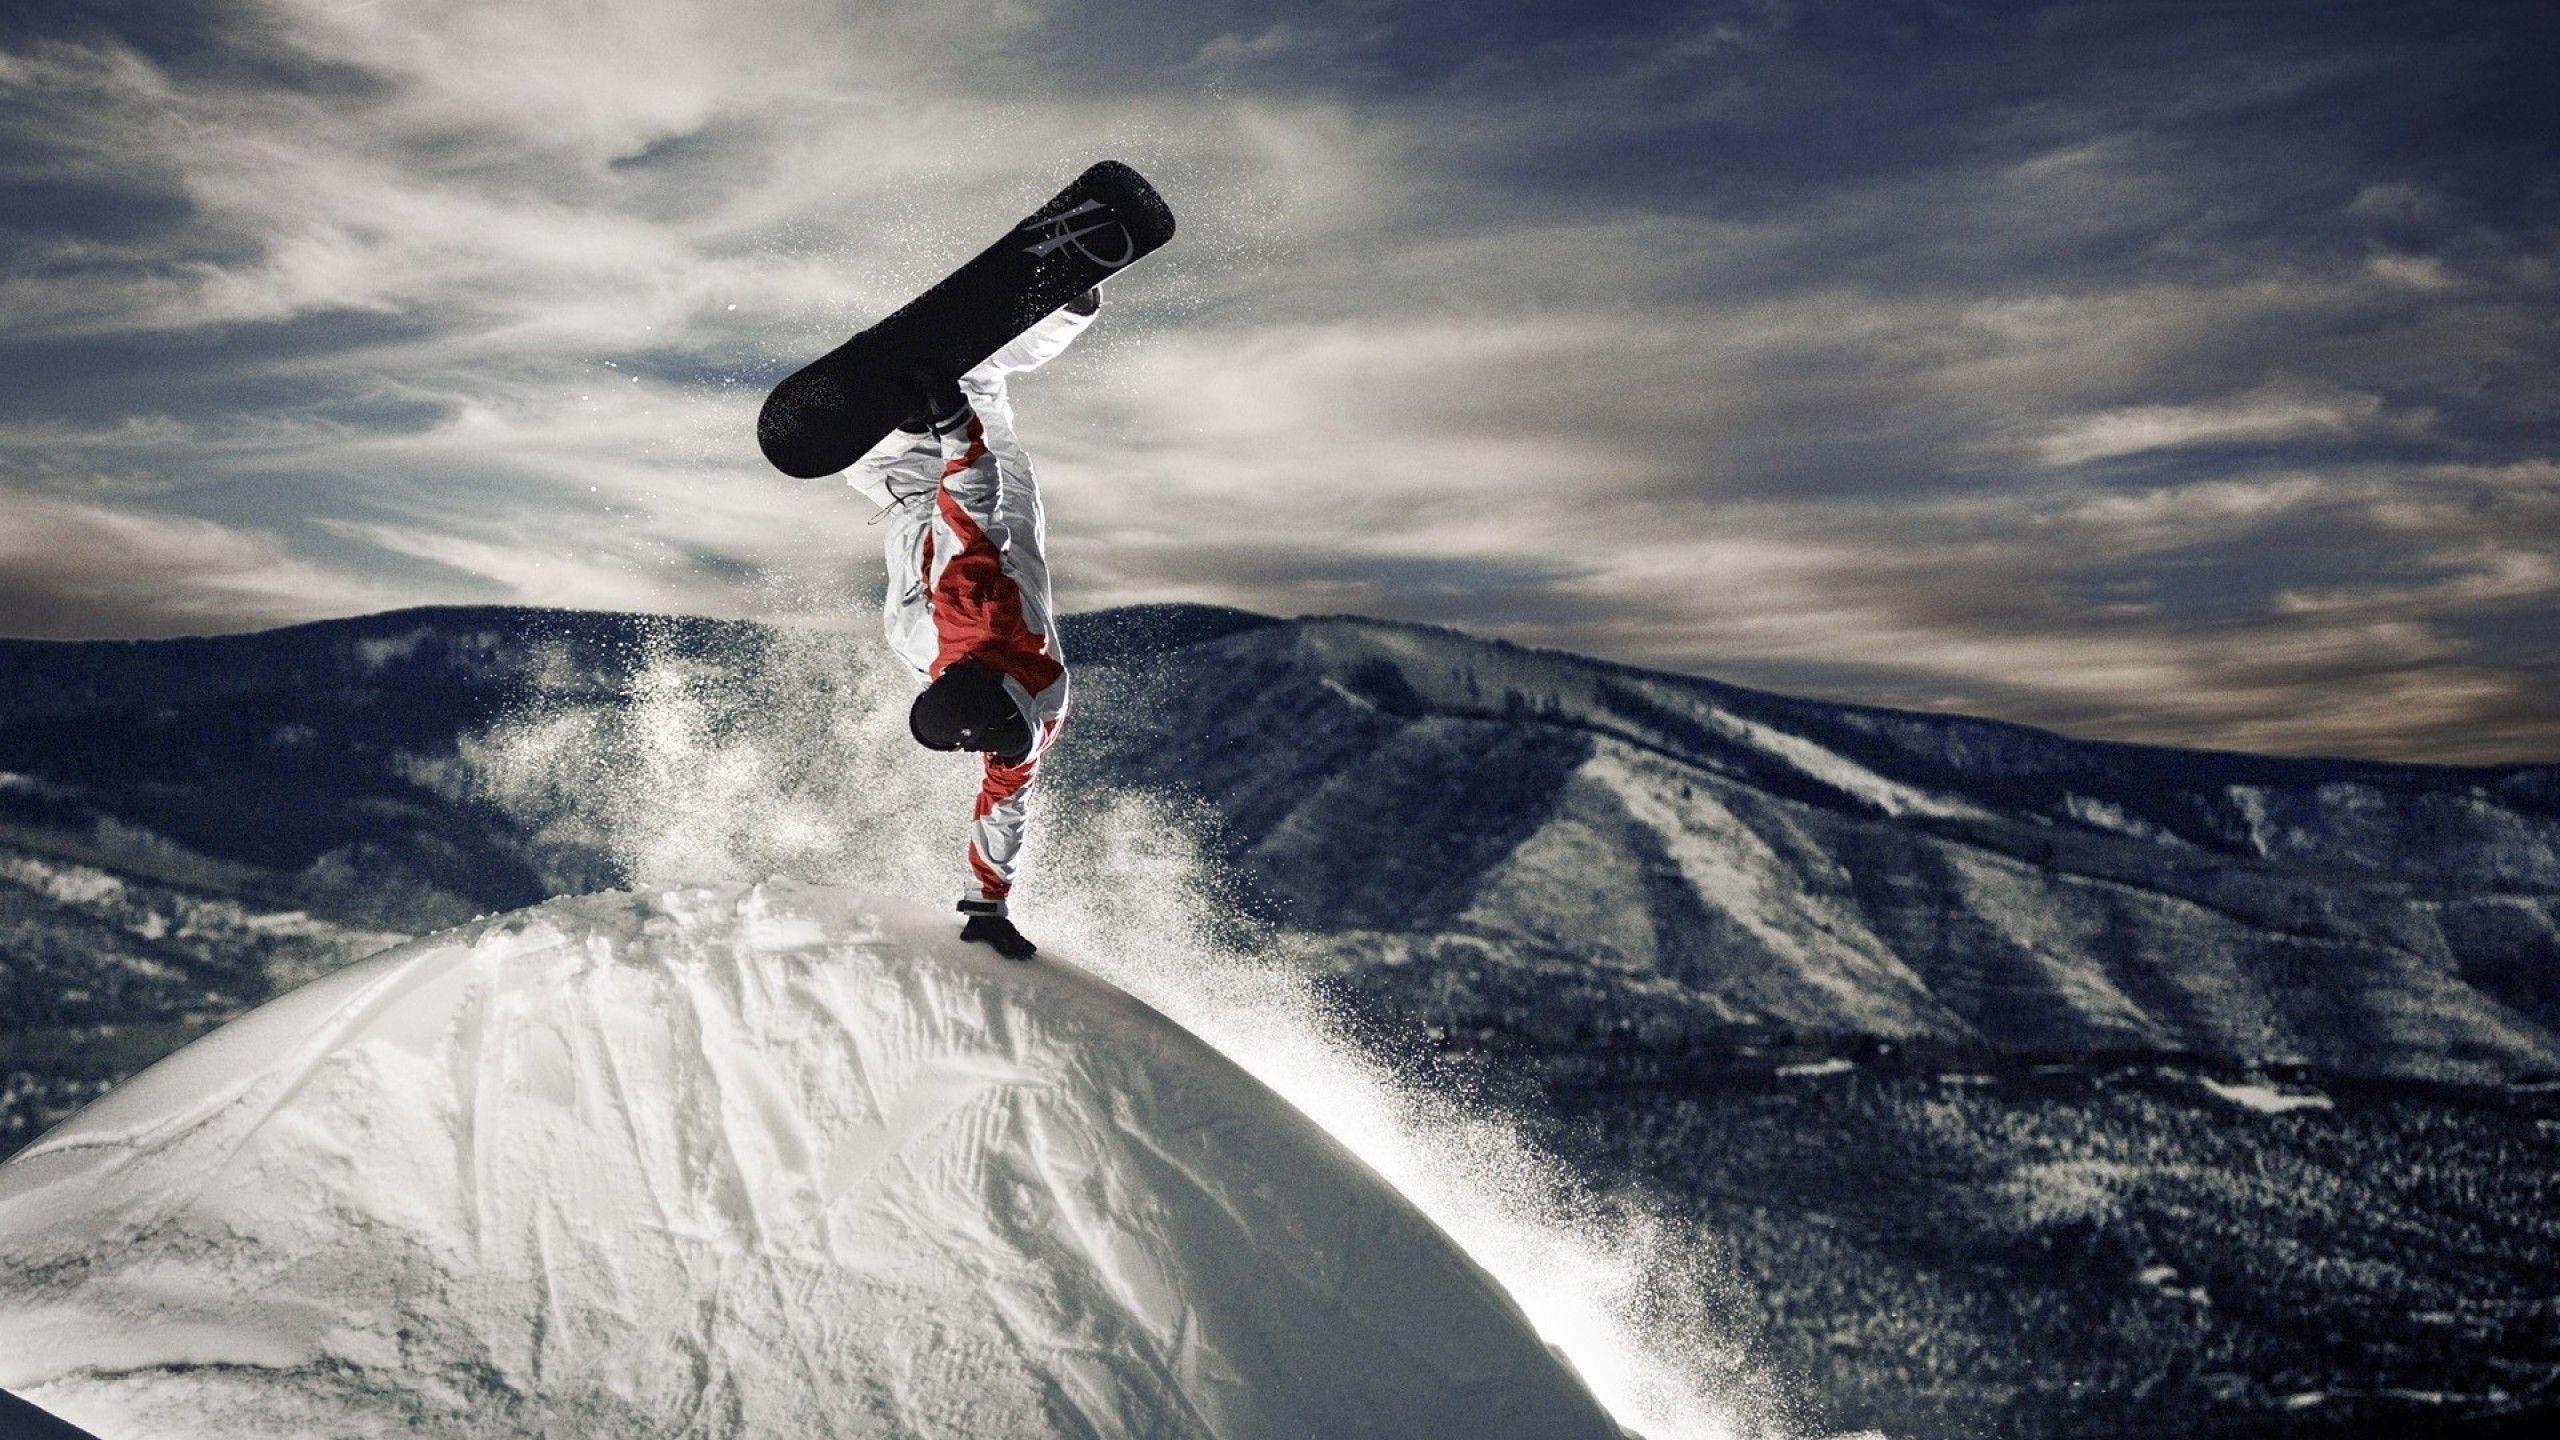 hd snowboarding wallpaper iphone. Snowboard